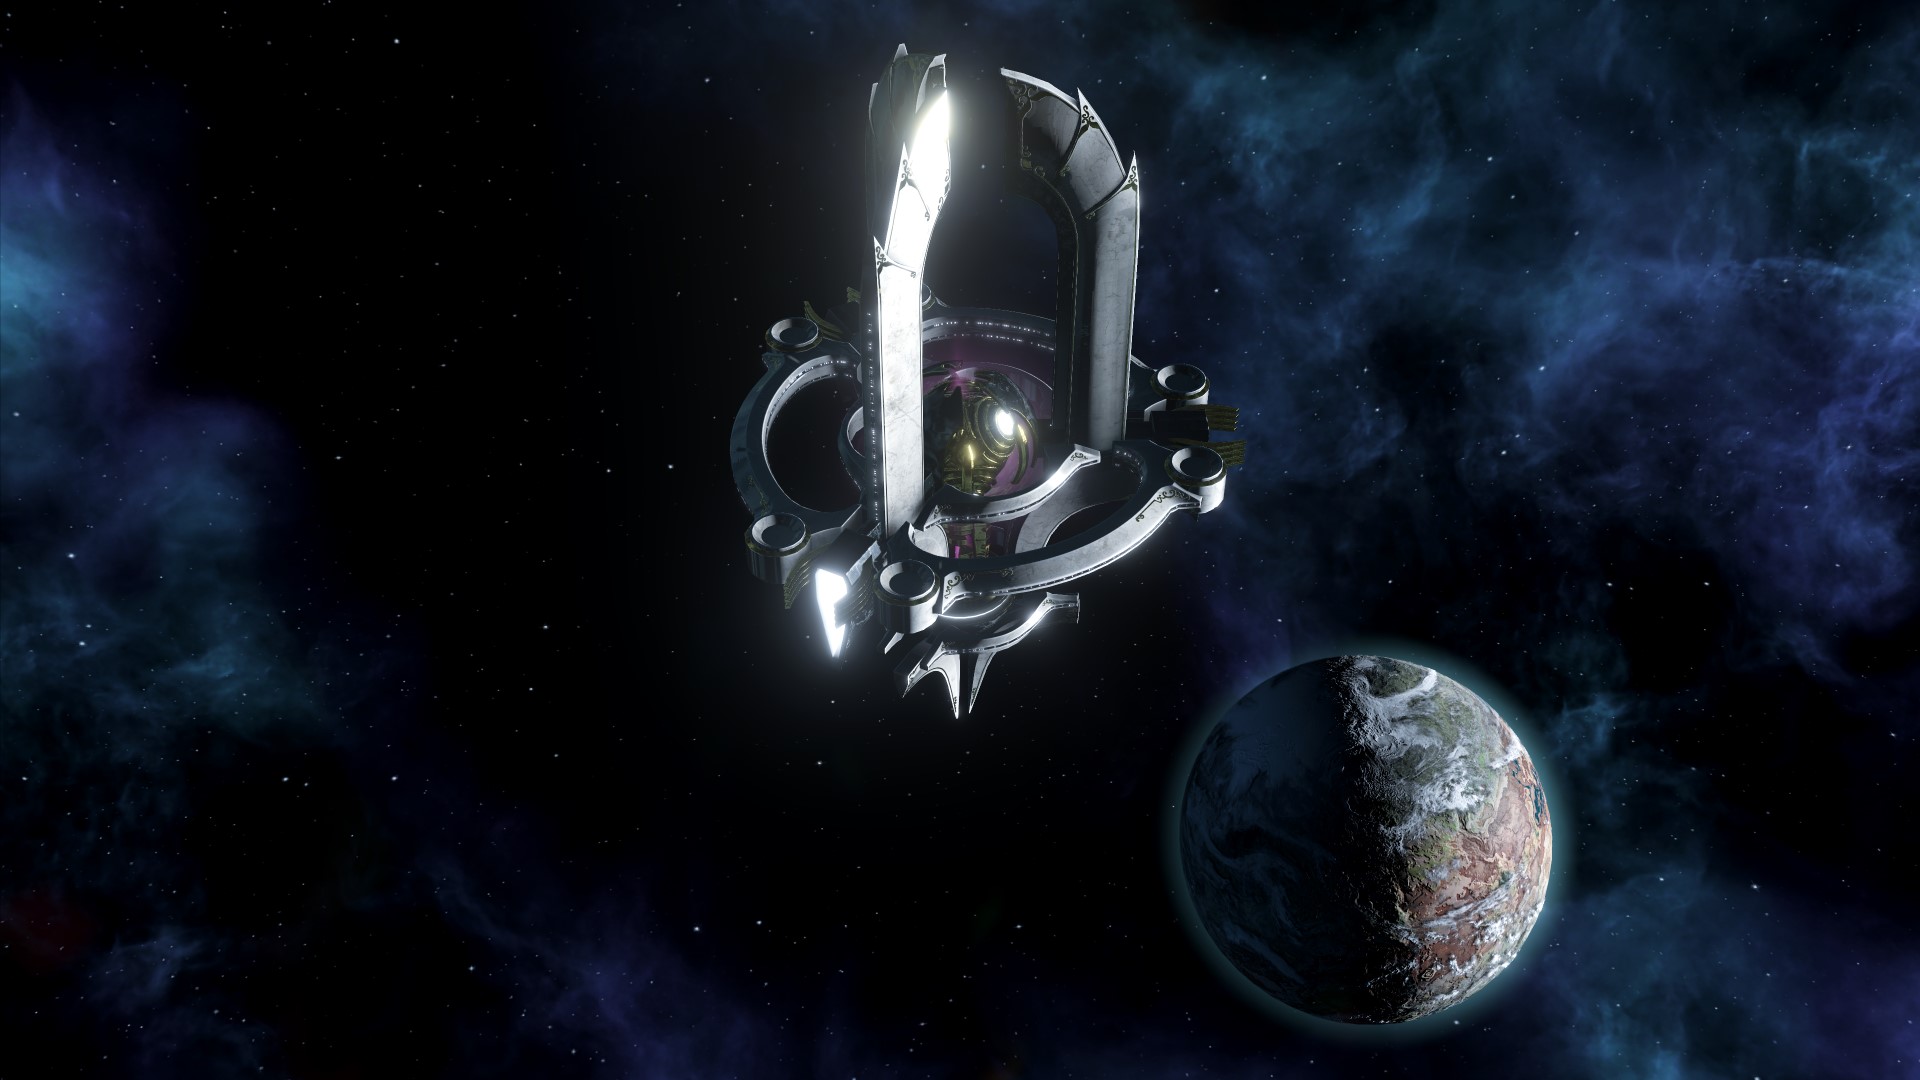 Stellaris First Contact story pack will add new pre-FTL mechanics